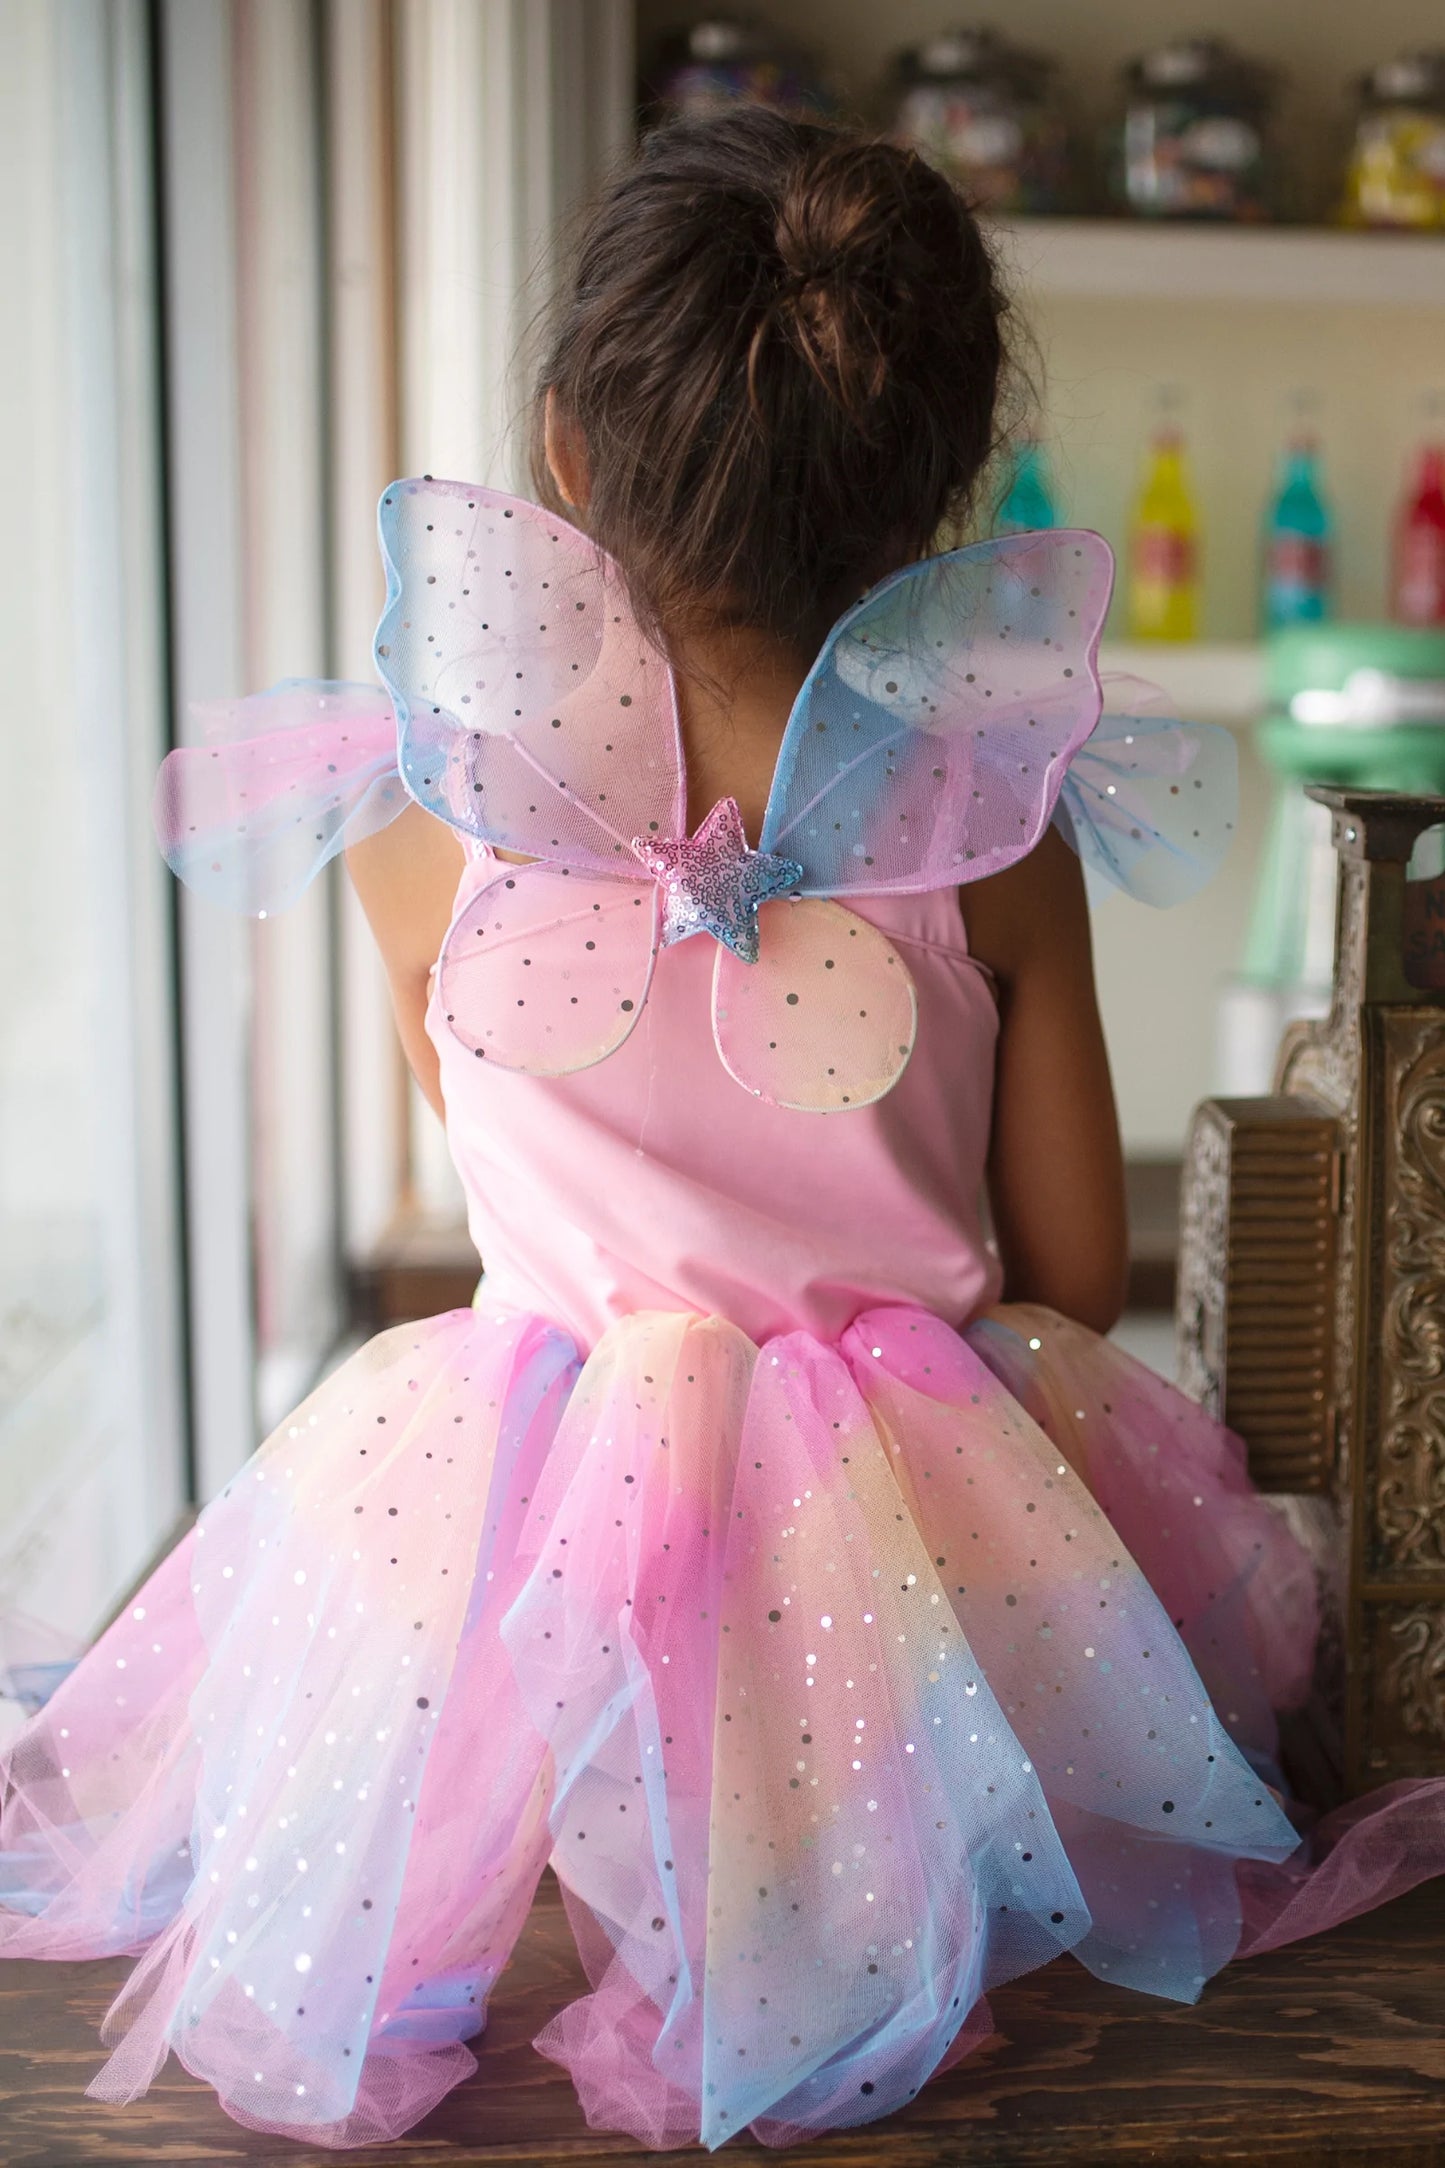 Great Pretenders Rainbow fairy kjole, str.5-6 år